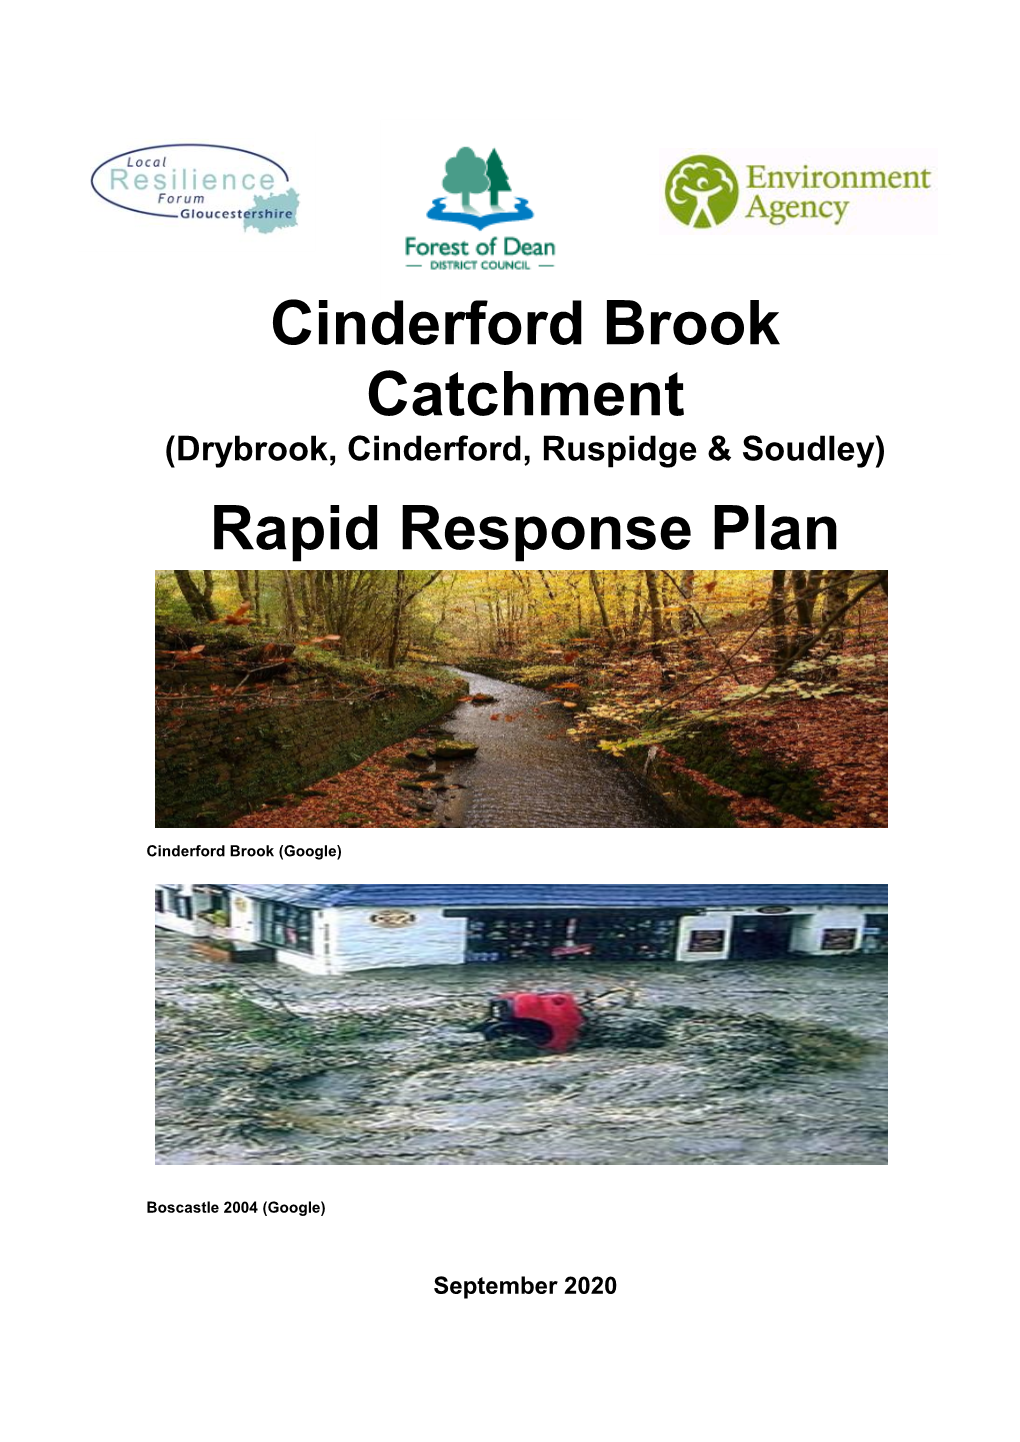 Cinderford Brook Rapid Response Plan